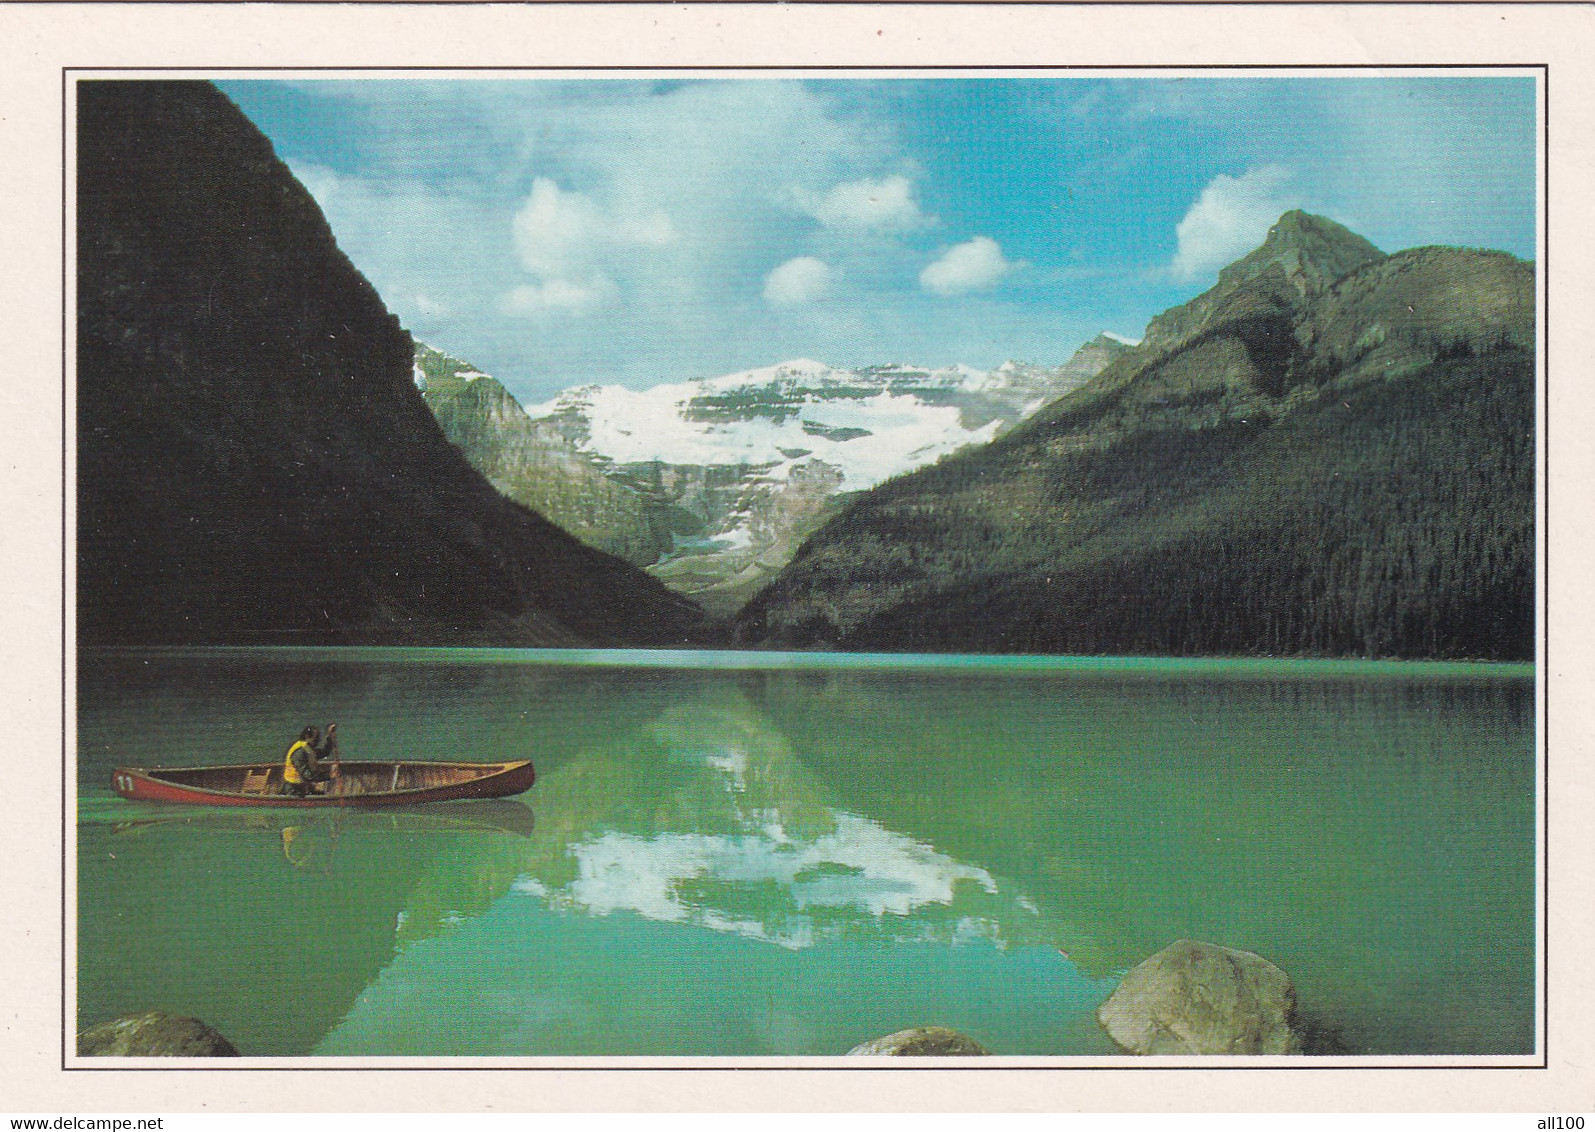 A19610 - ALBERTA LAKE LOUISE CANADA LE LAC LOUISE POST CARD UNUSED PHOTO VALENTIN EXPLORER IMPRIME EN CEE - Lac Louise